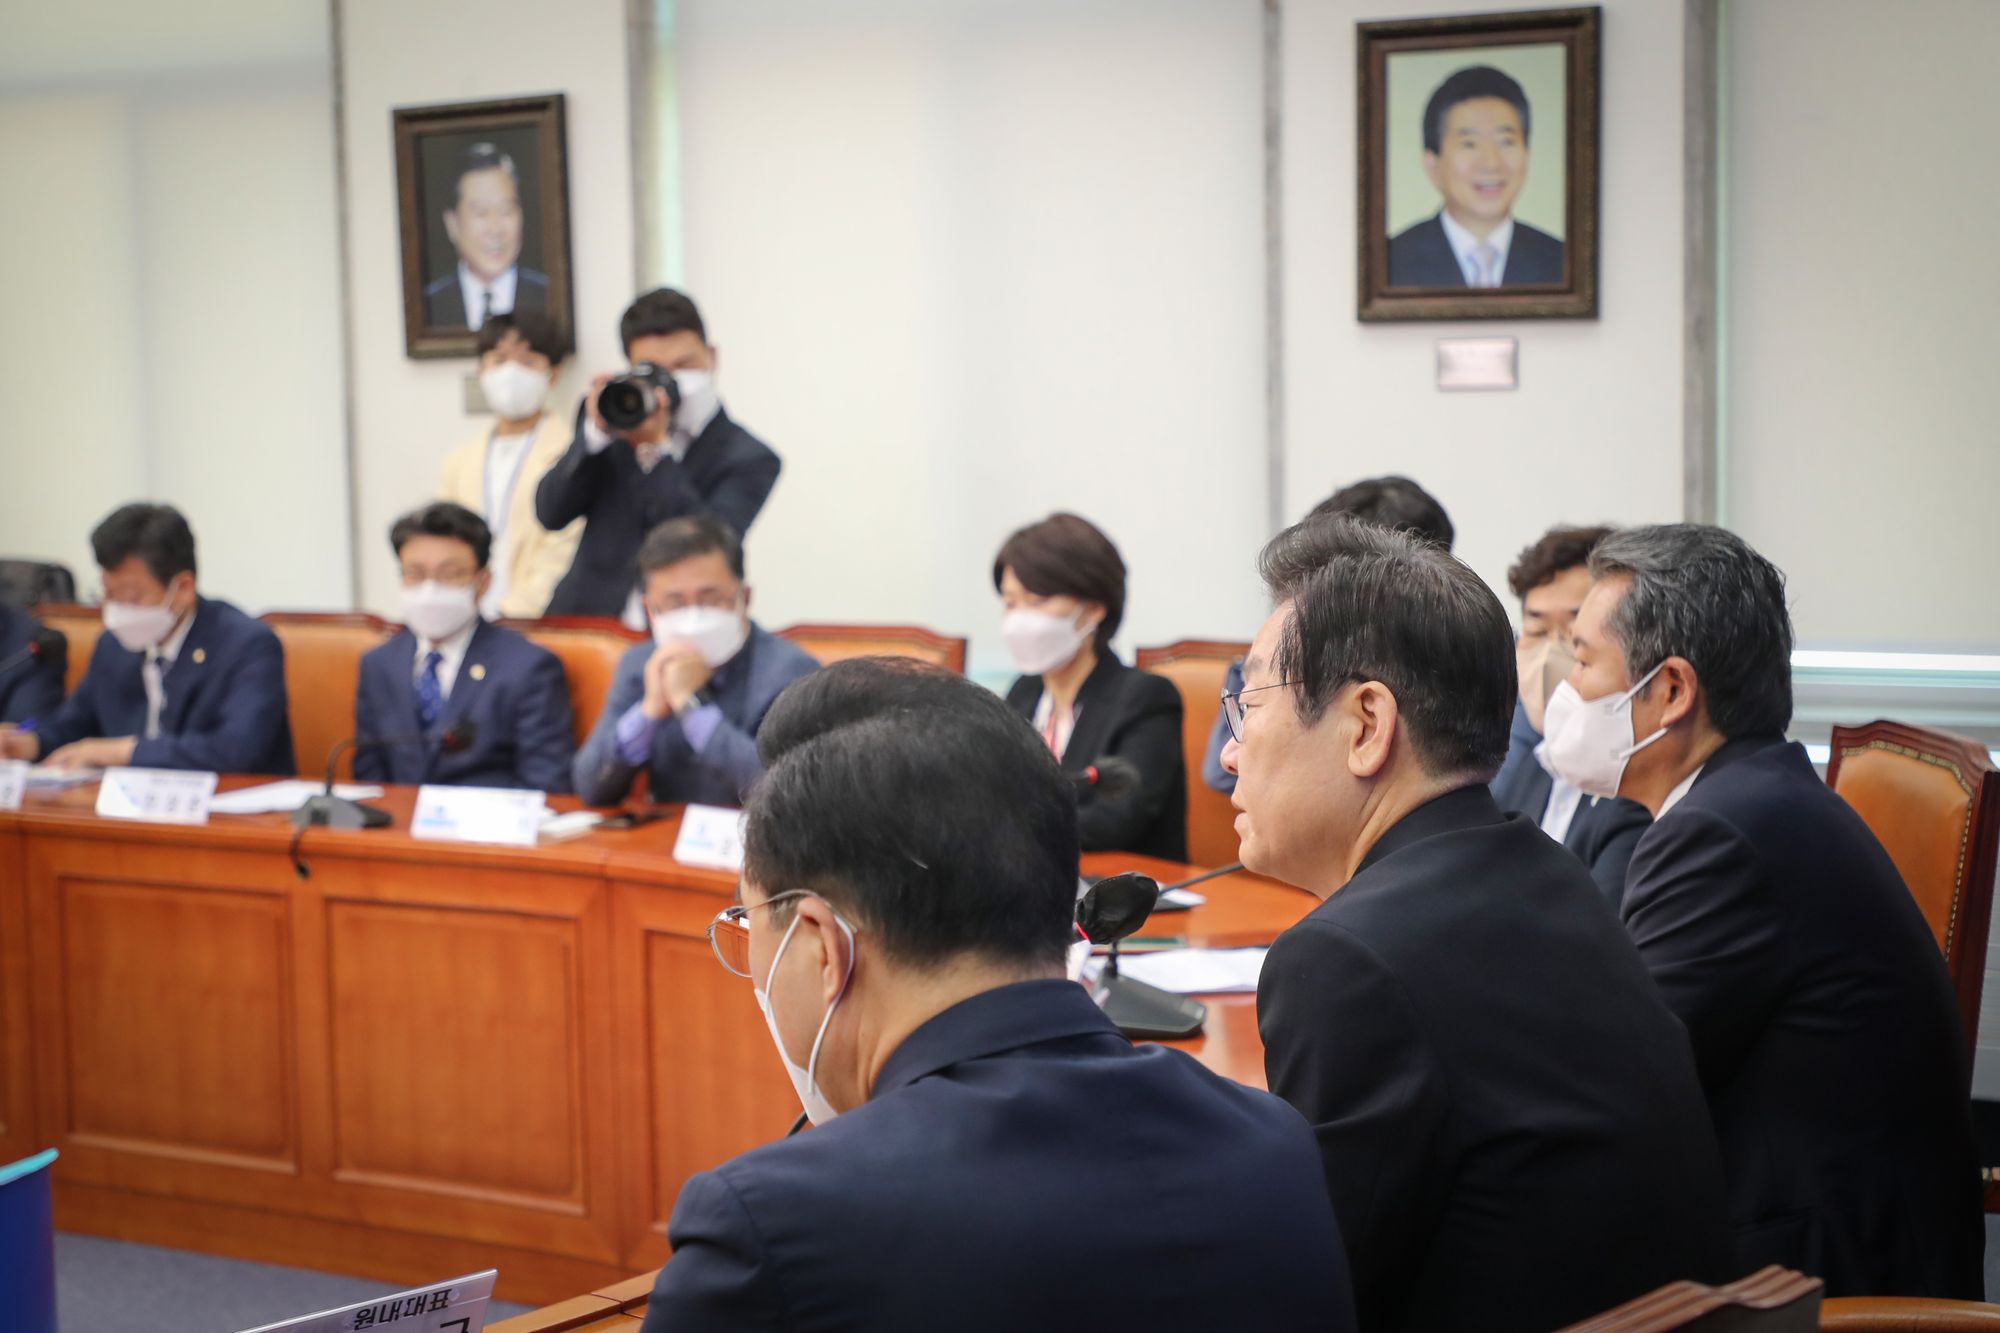 The New Landscape of South Korean Politics